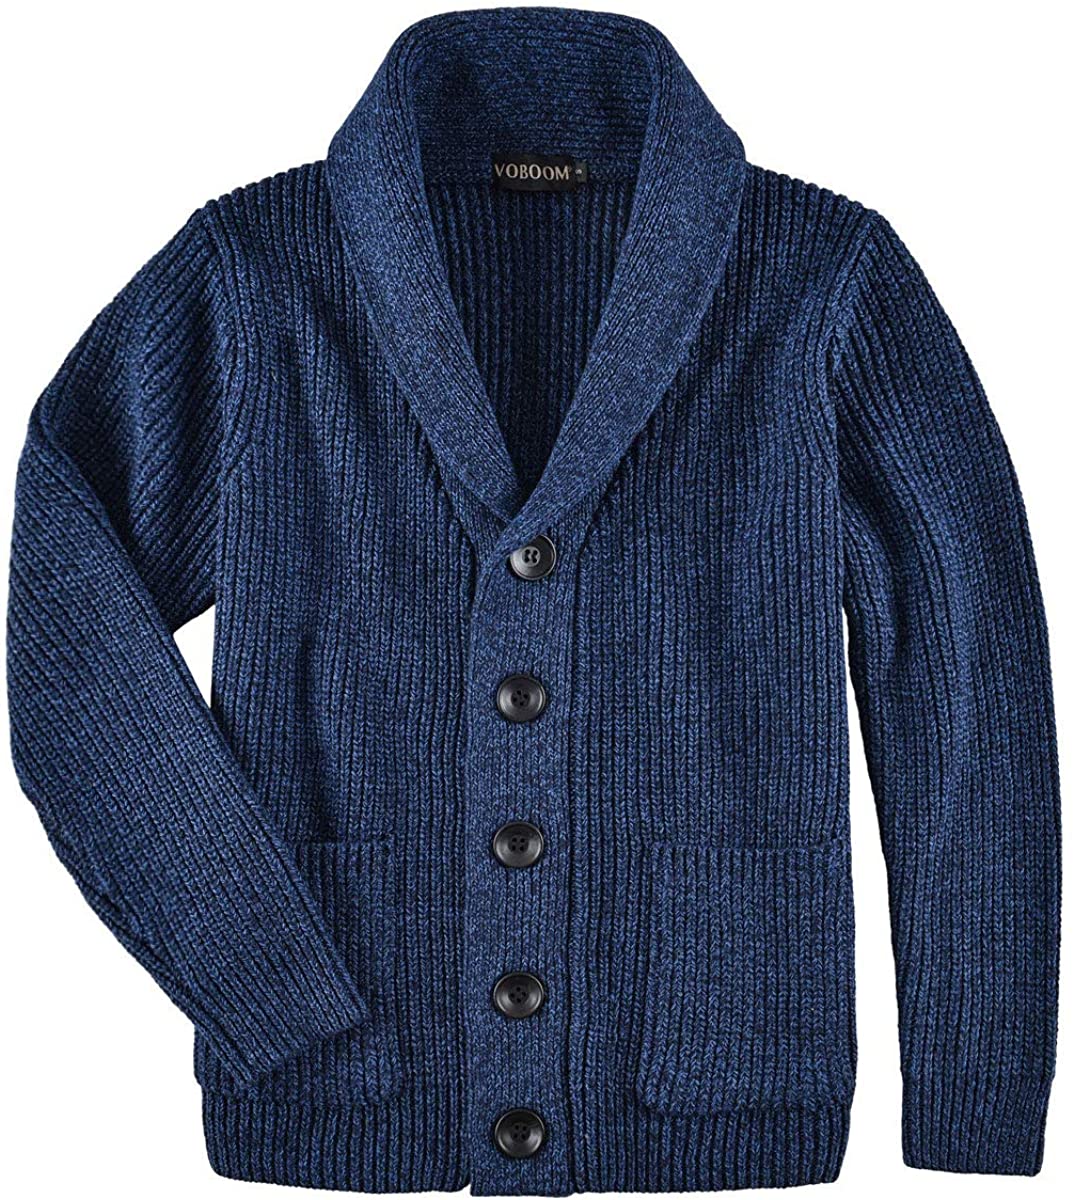 VOBOOM Men's Knitwear Button Down Shawl Collar Cardigan Sweater with ...